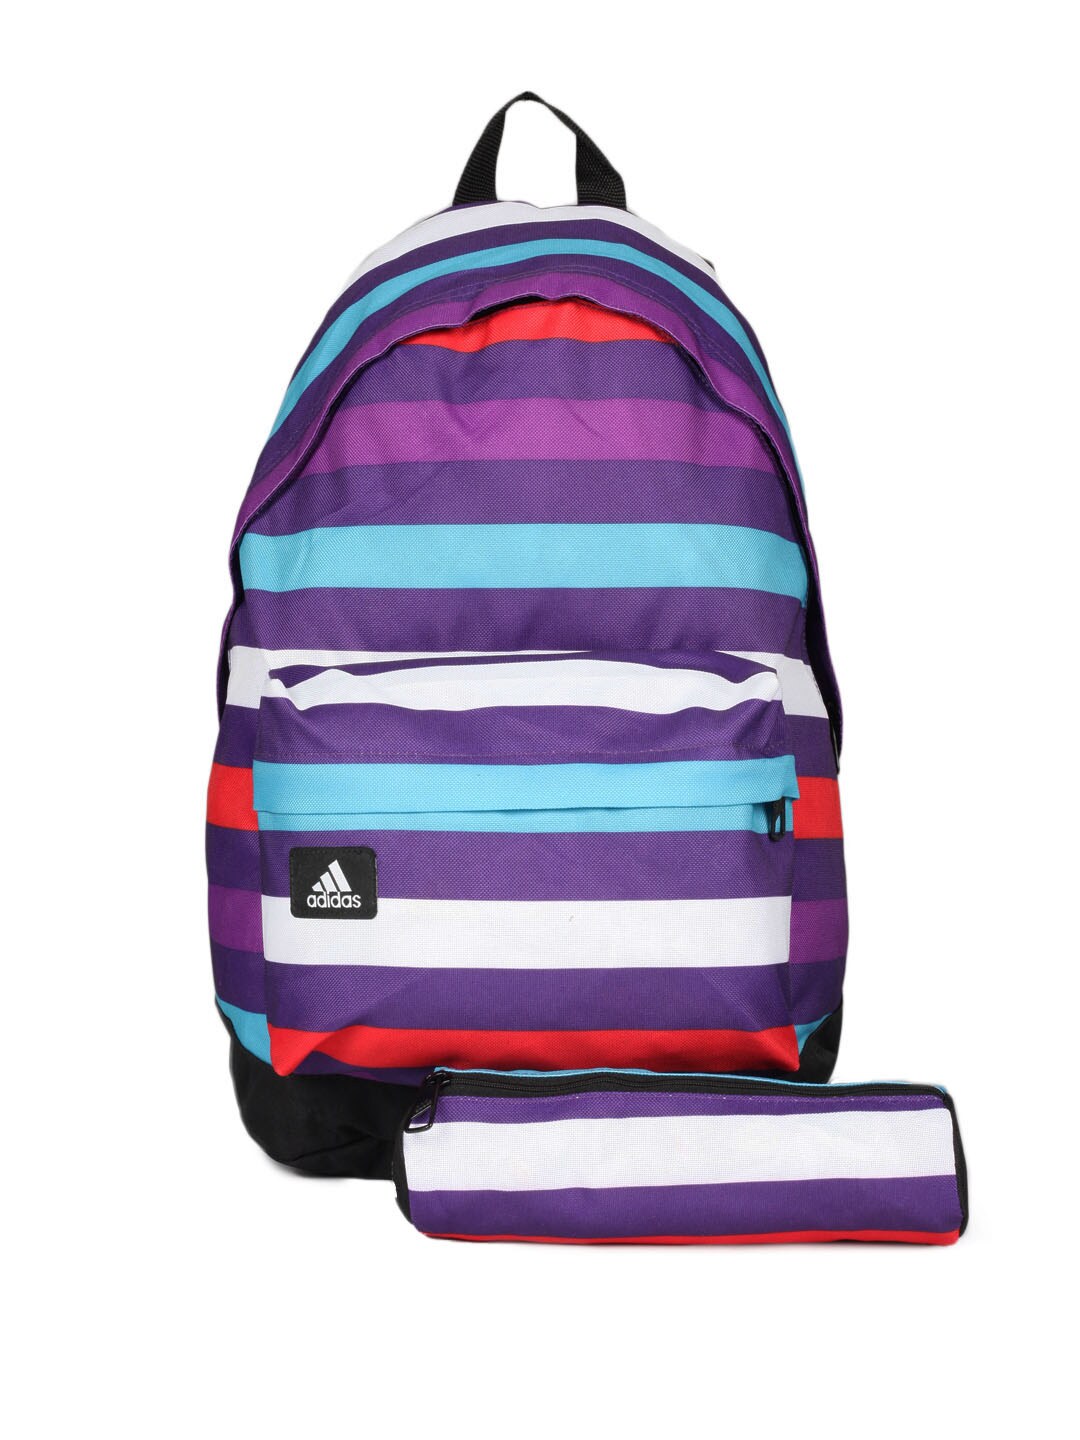 ADIDAS Women Purple Striped Backpack